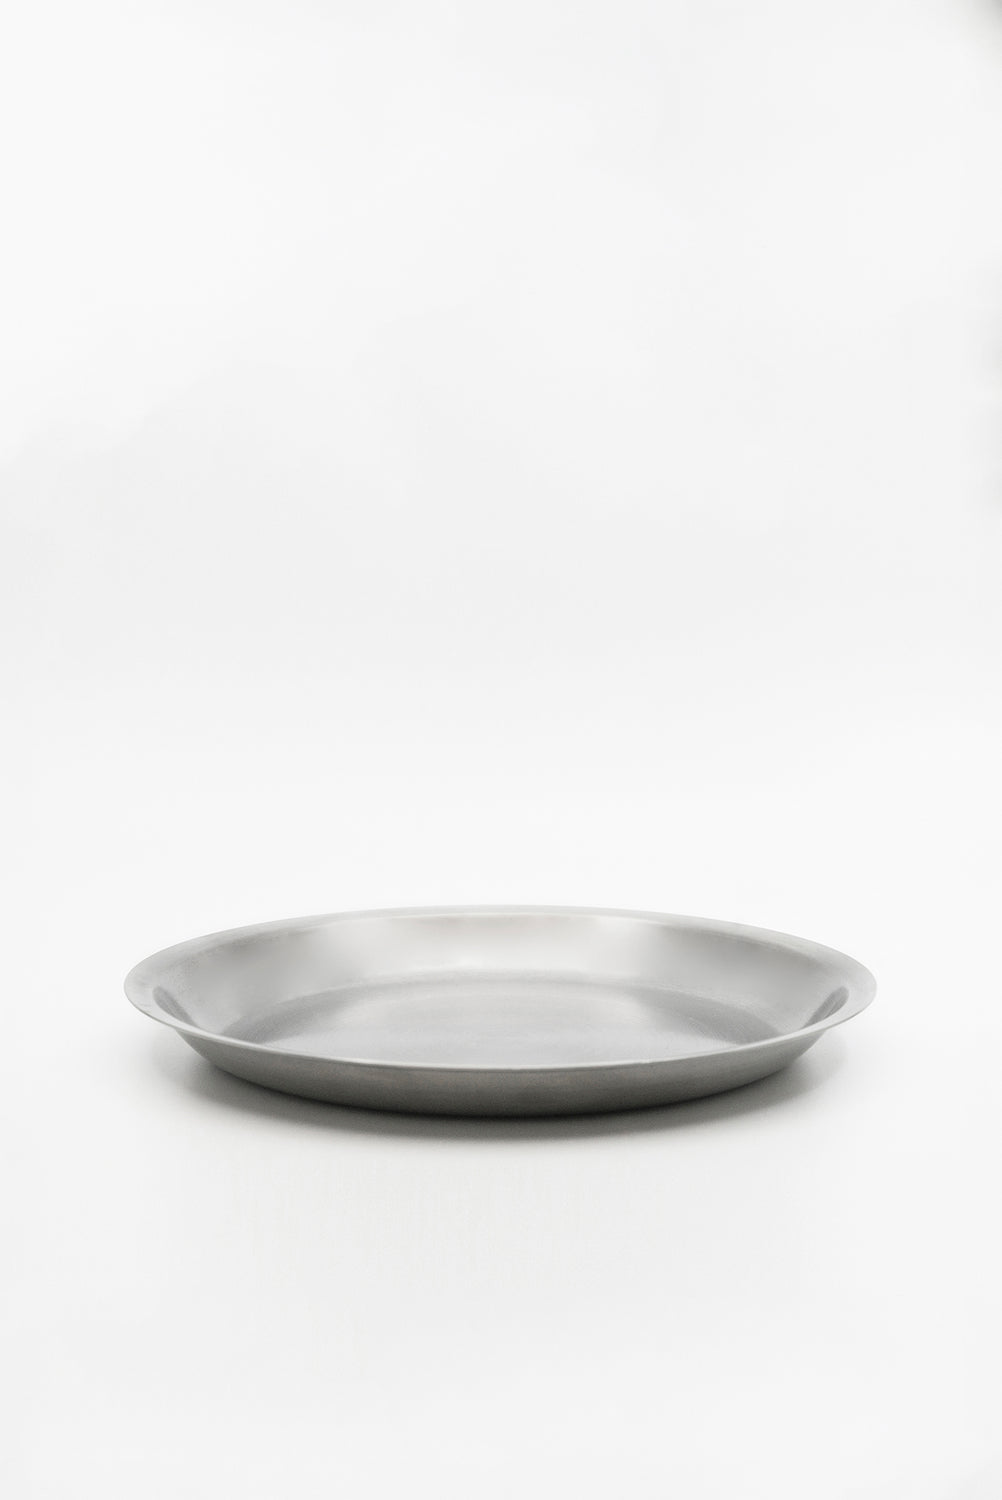 Makanai Stainless Steel Bowl Set Medium